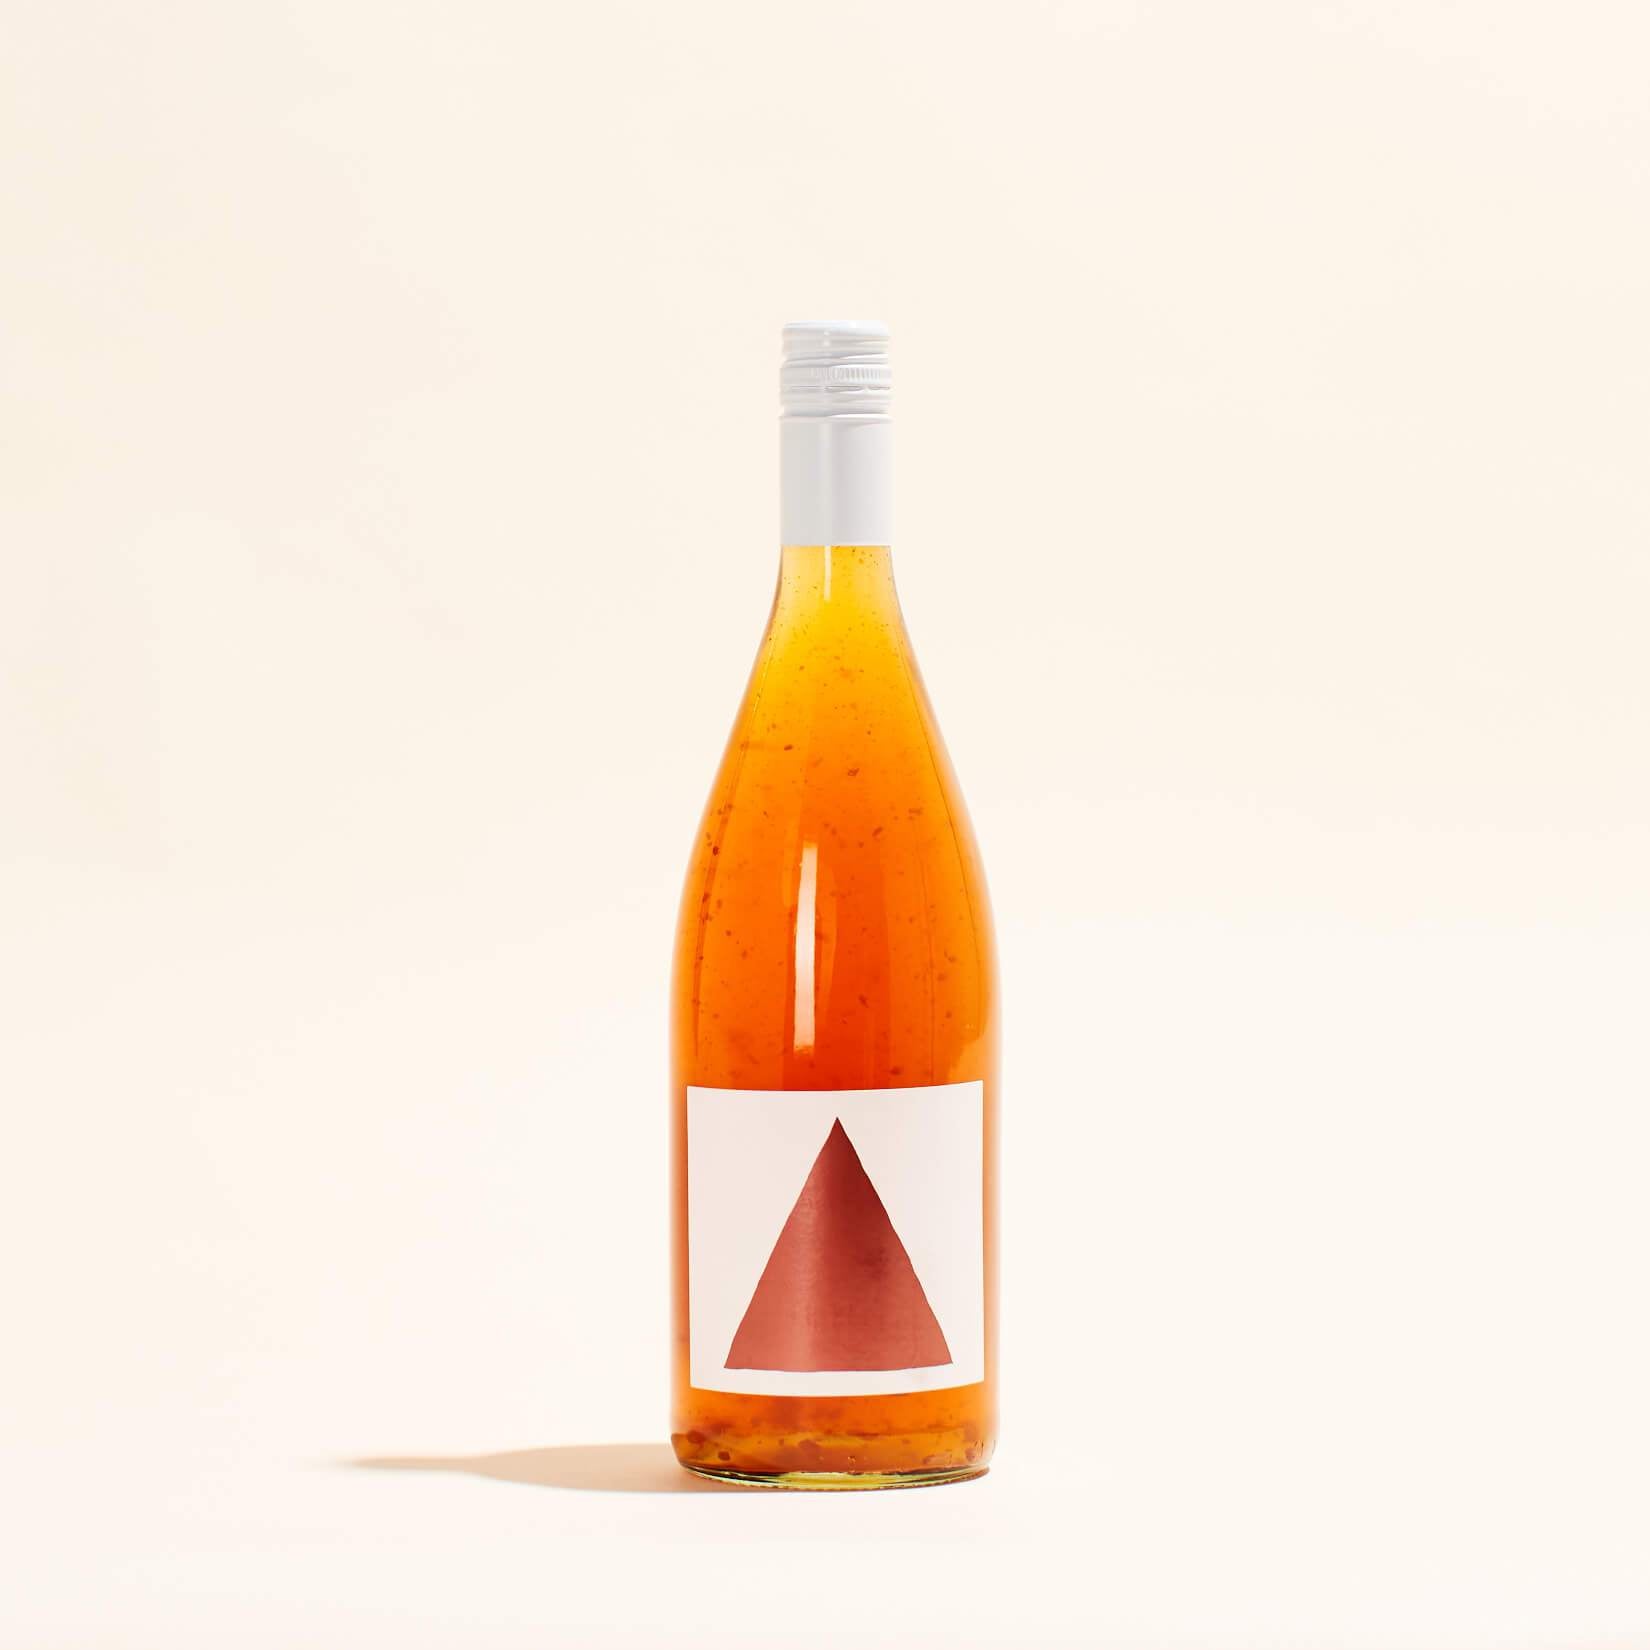 das bronze weingut edelberg natural Orange wine Nahe Germany front label